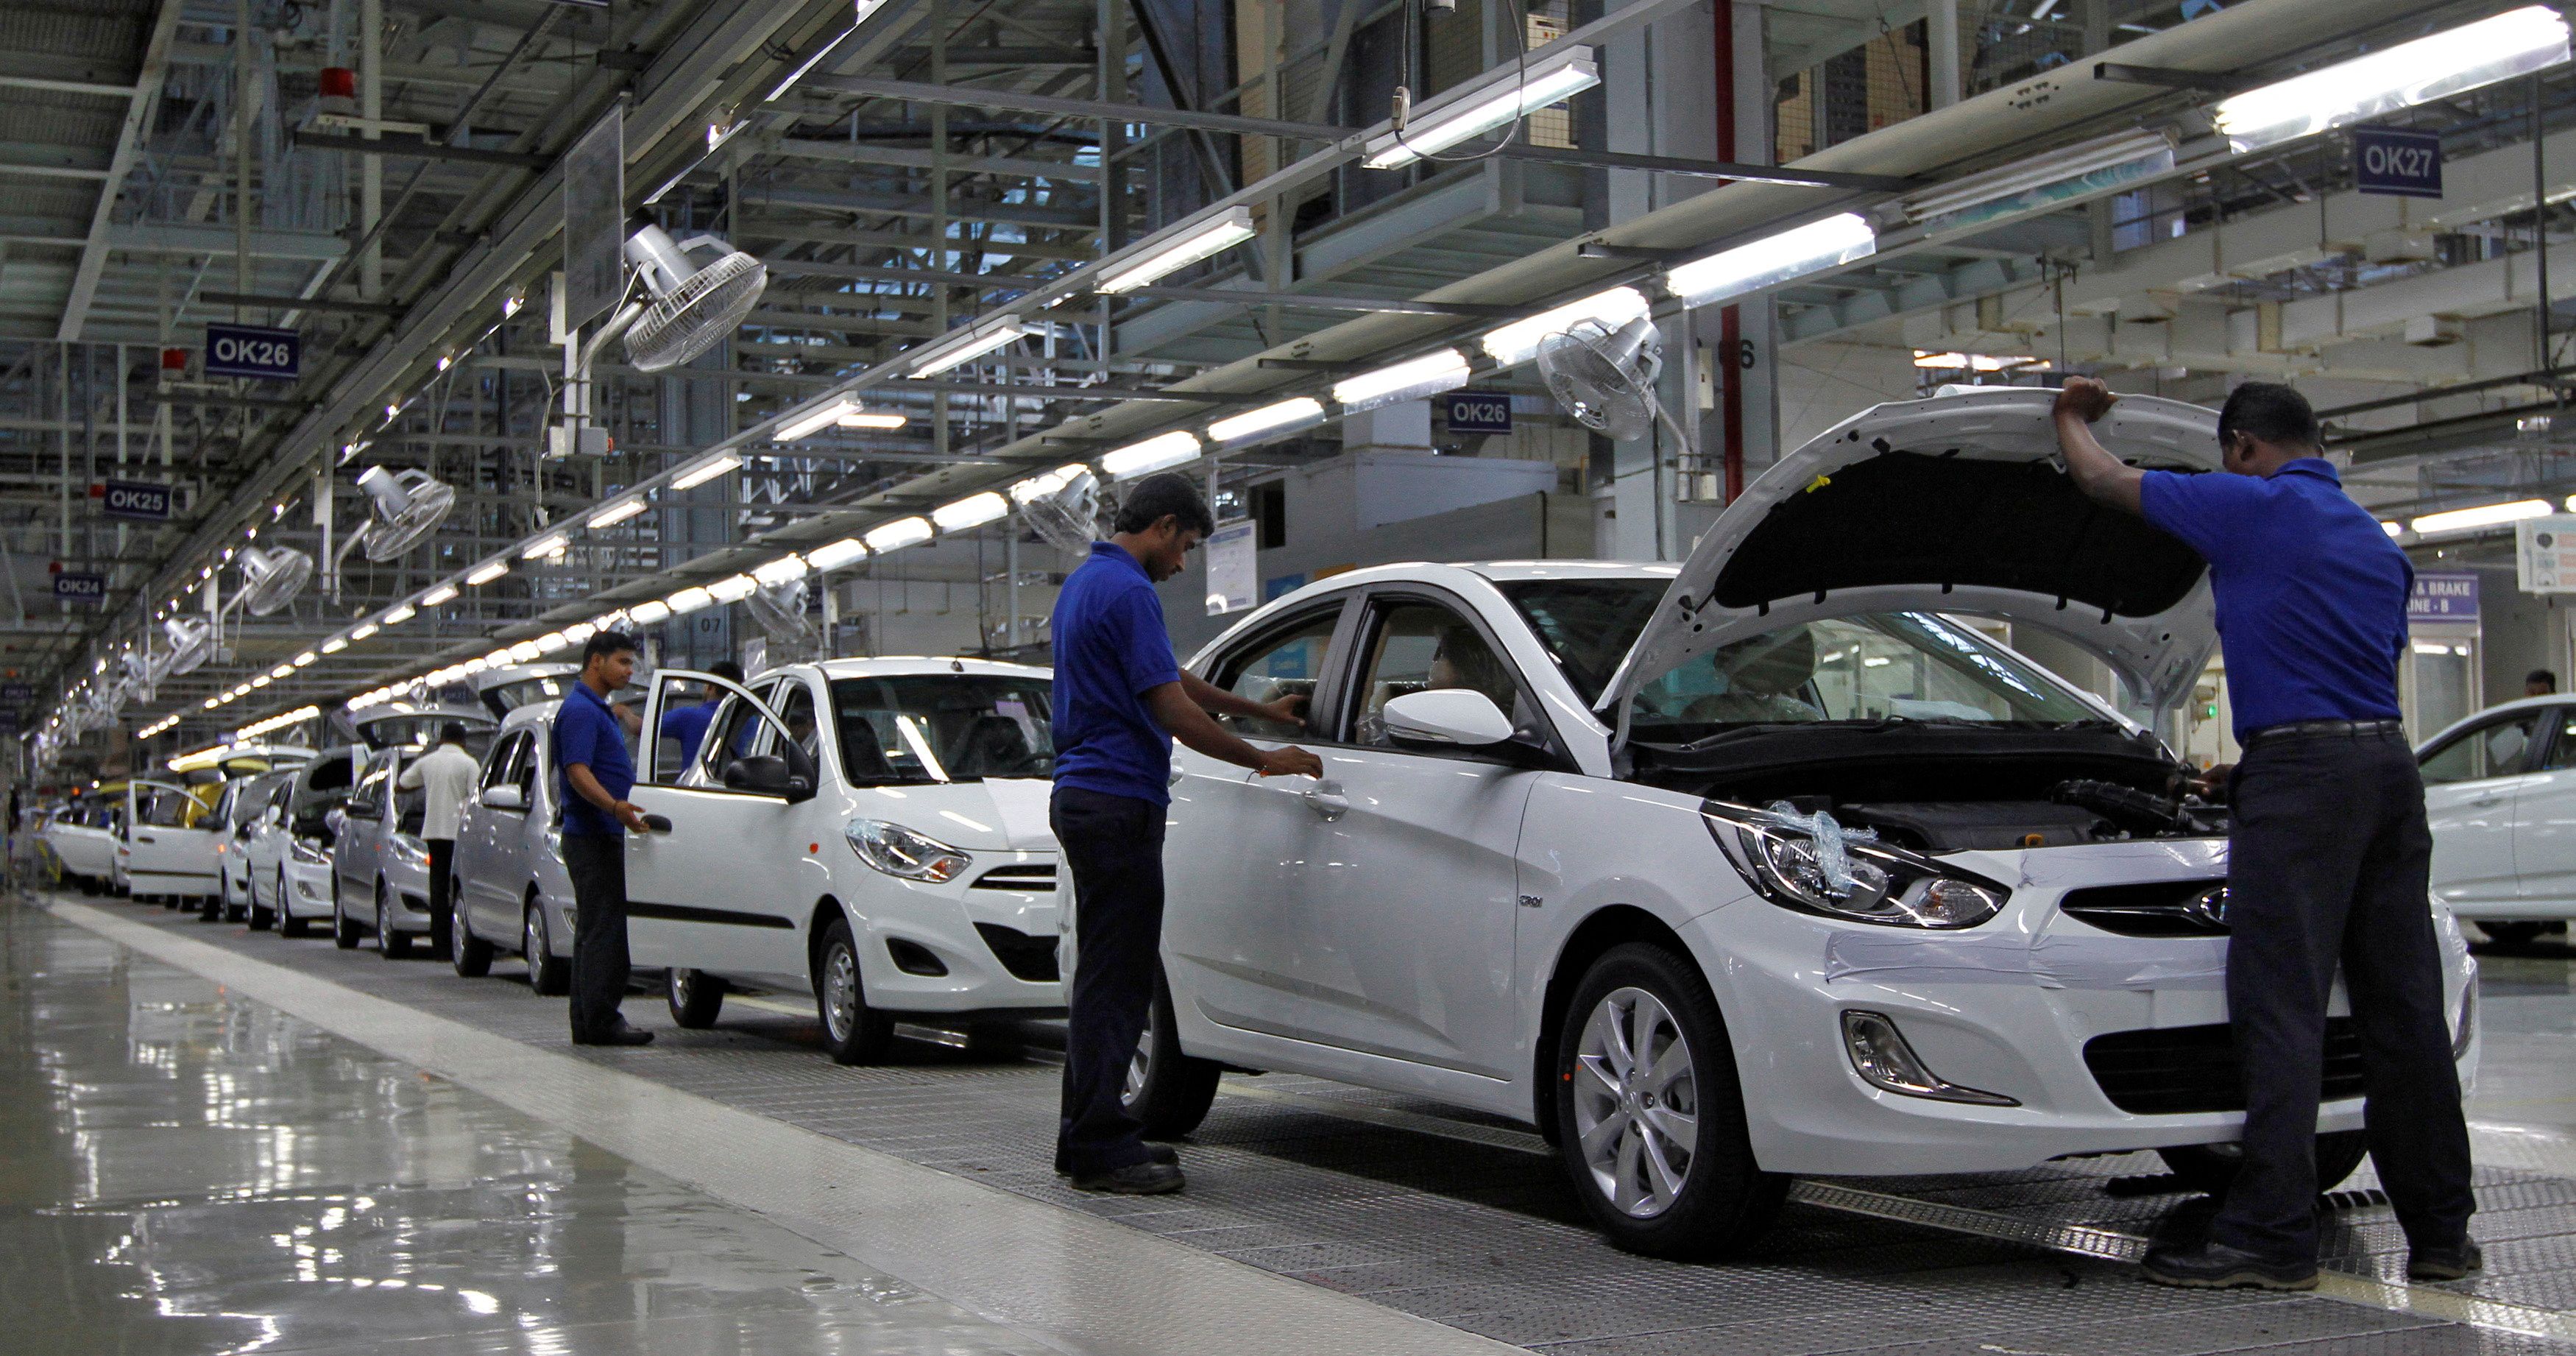 Workers assemble cars inside the Hyundai Motor India Ltd. plant at Kancheepuram district in Tamil Nadu